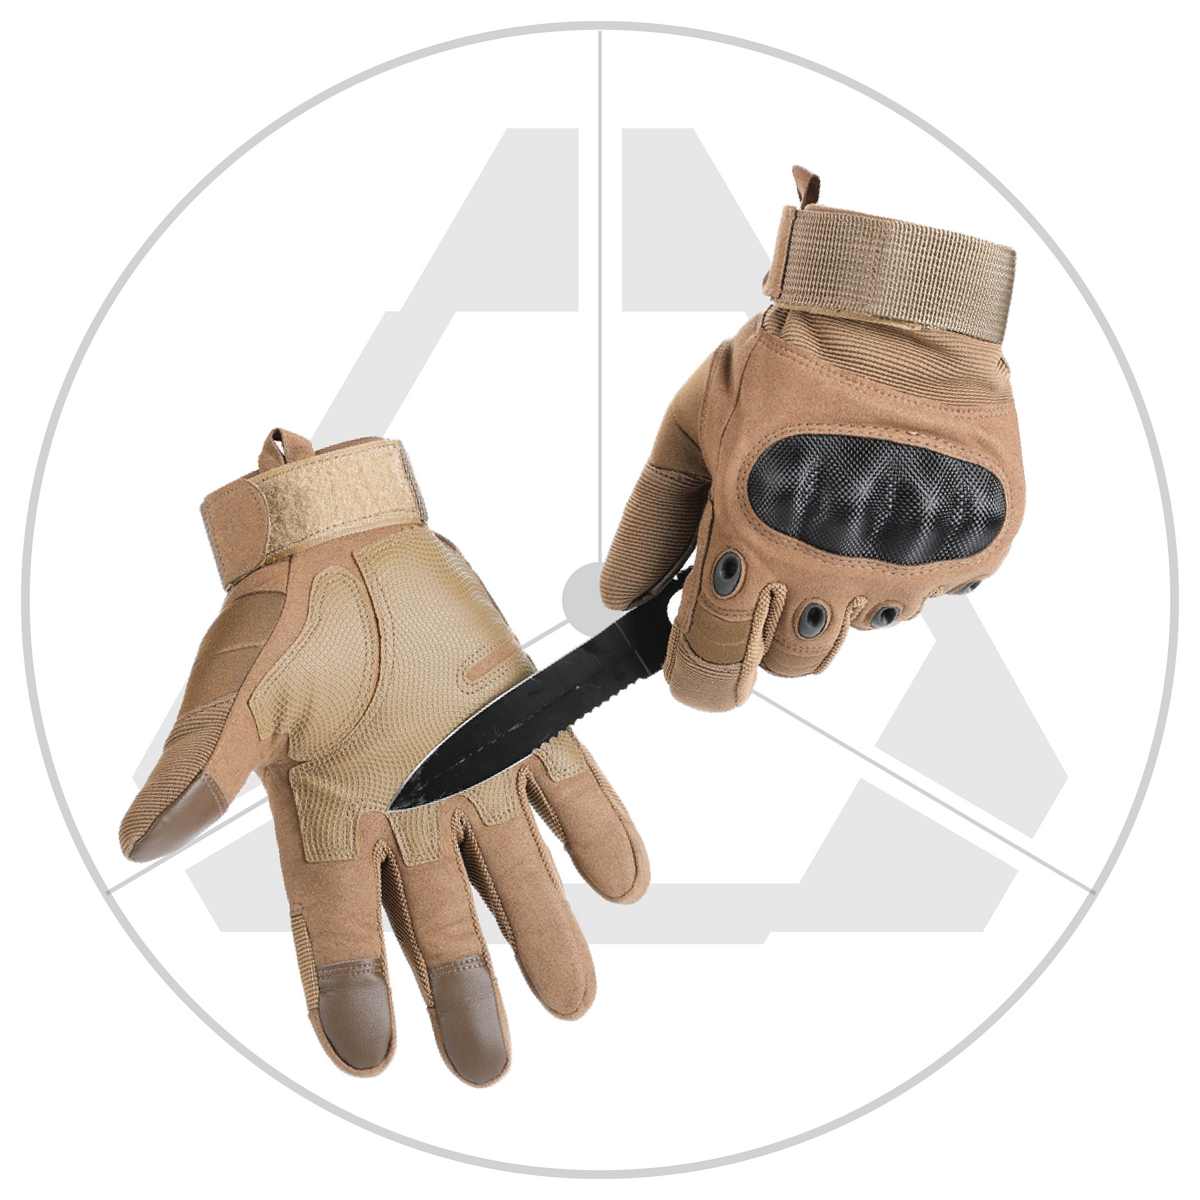 Tactical Combat Gloves – iTACTICALi